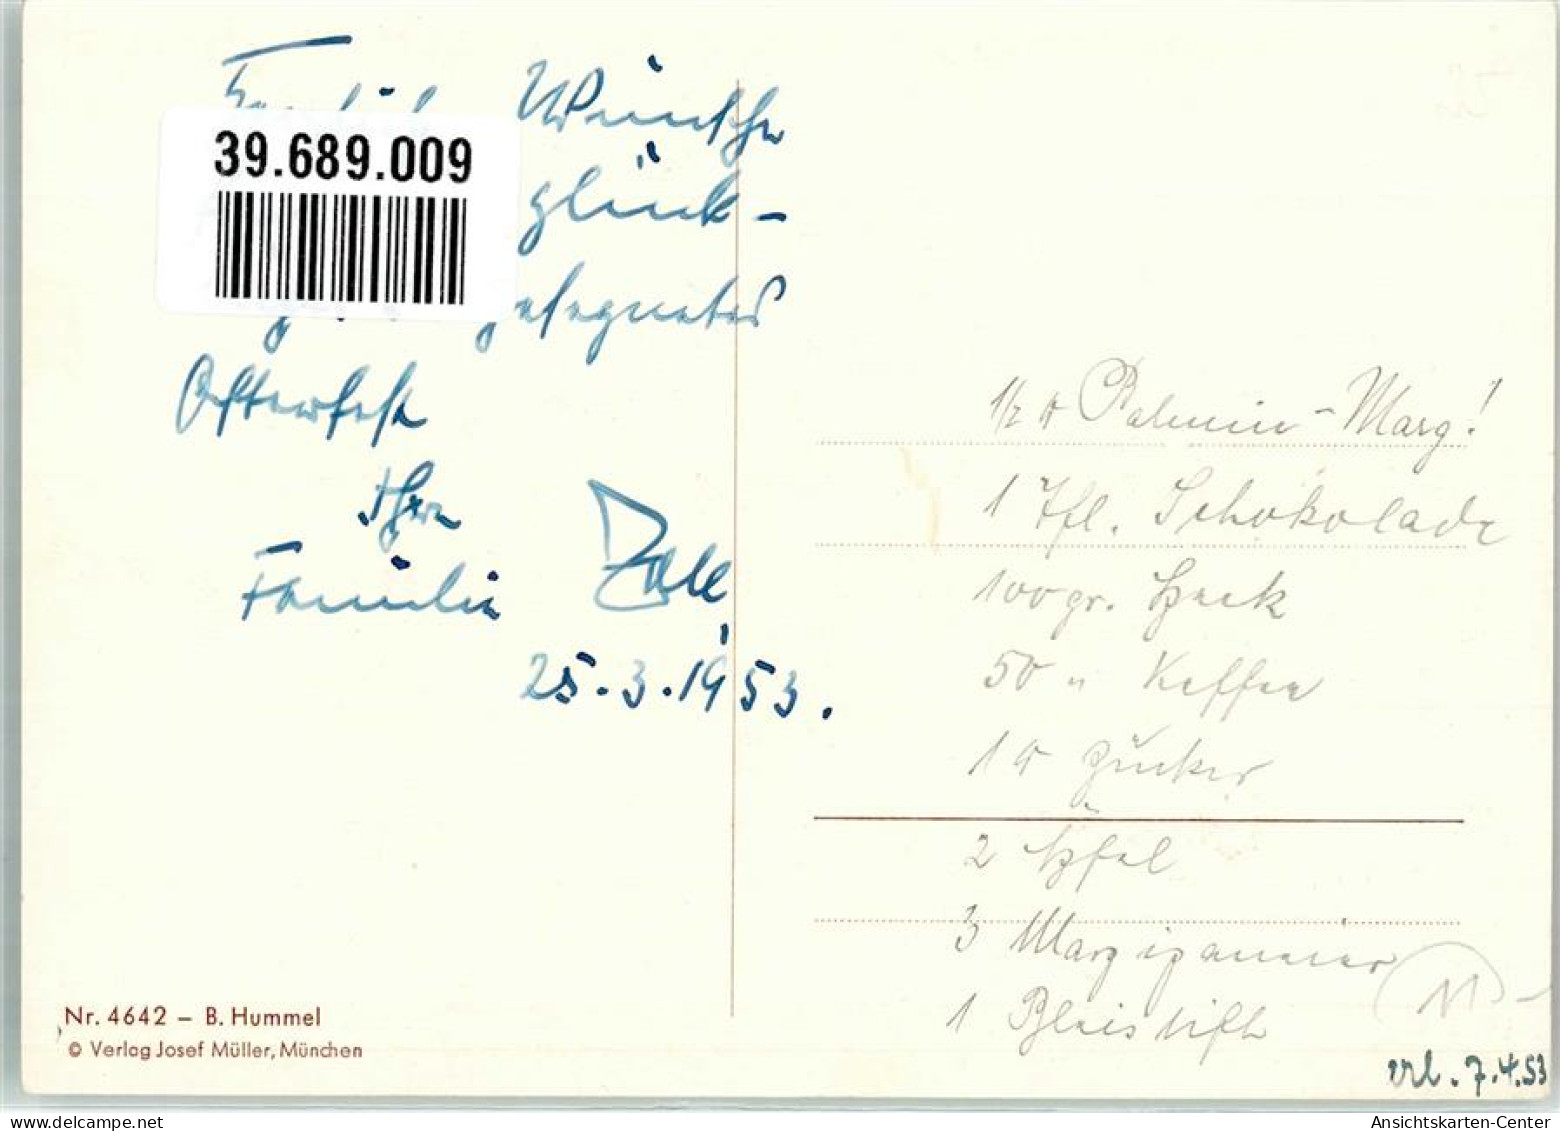 39689009 - Kind  Kueken Korb Mit Eier Ostern Sign. Hummel Verlag Josef Mueller Nr. 4642 - Easter